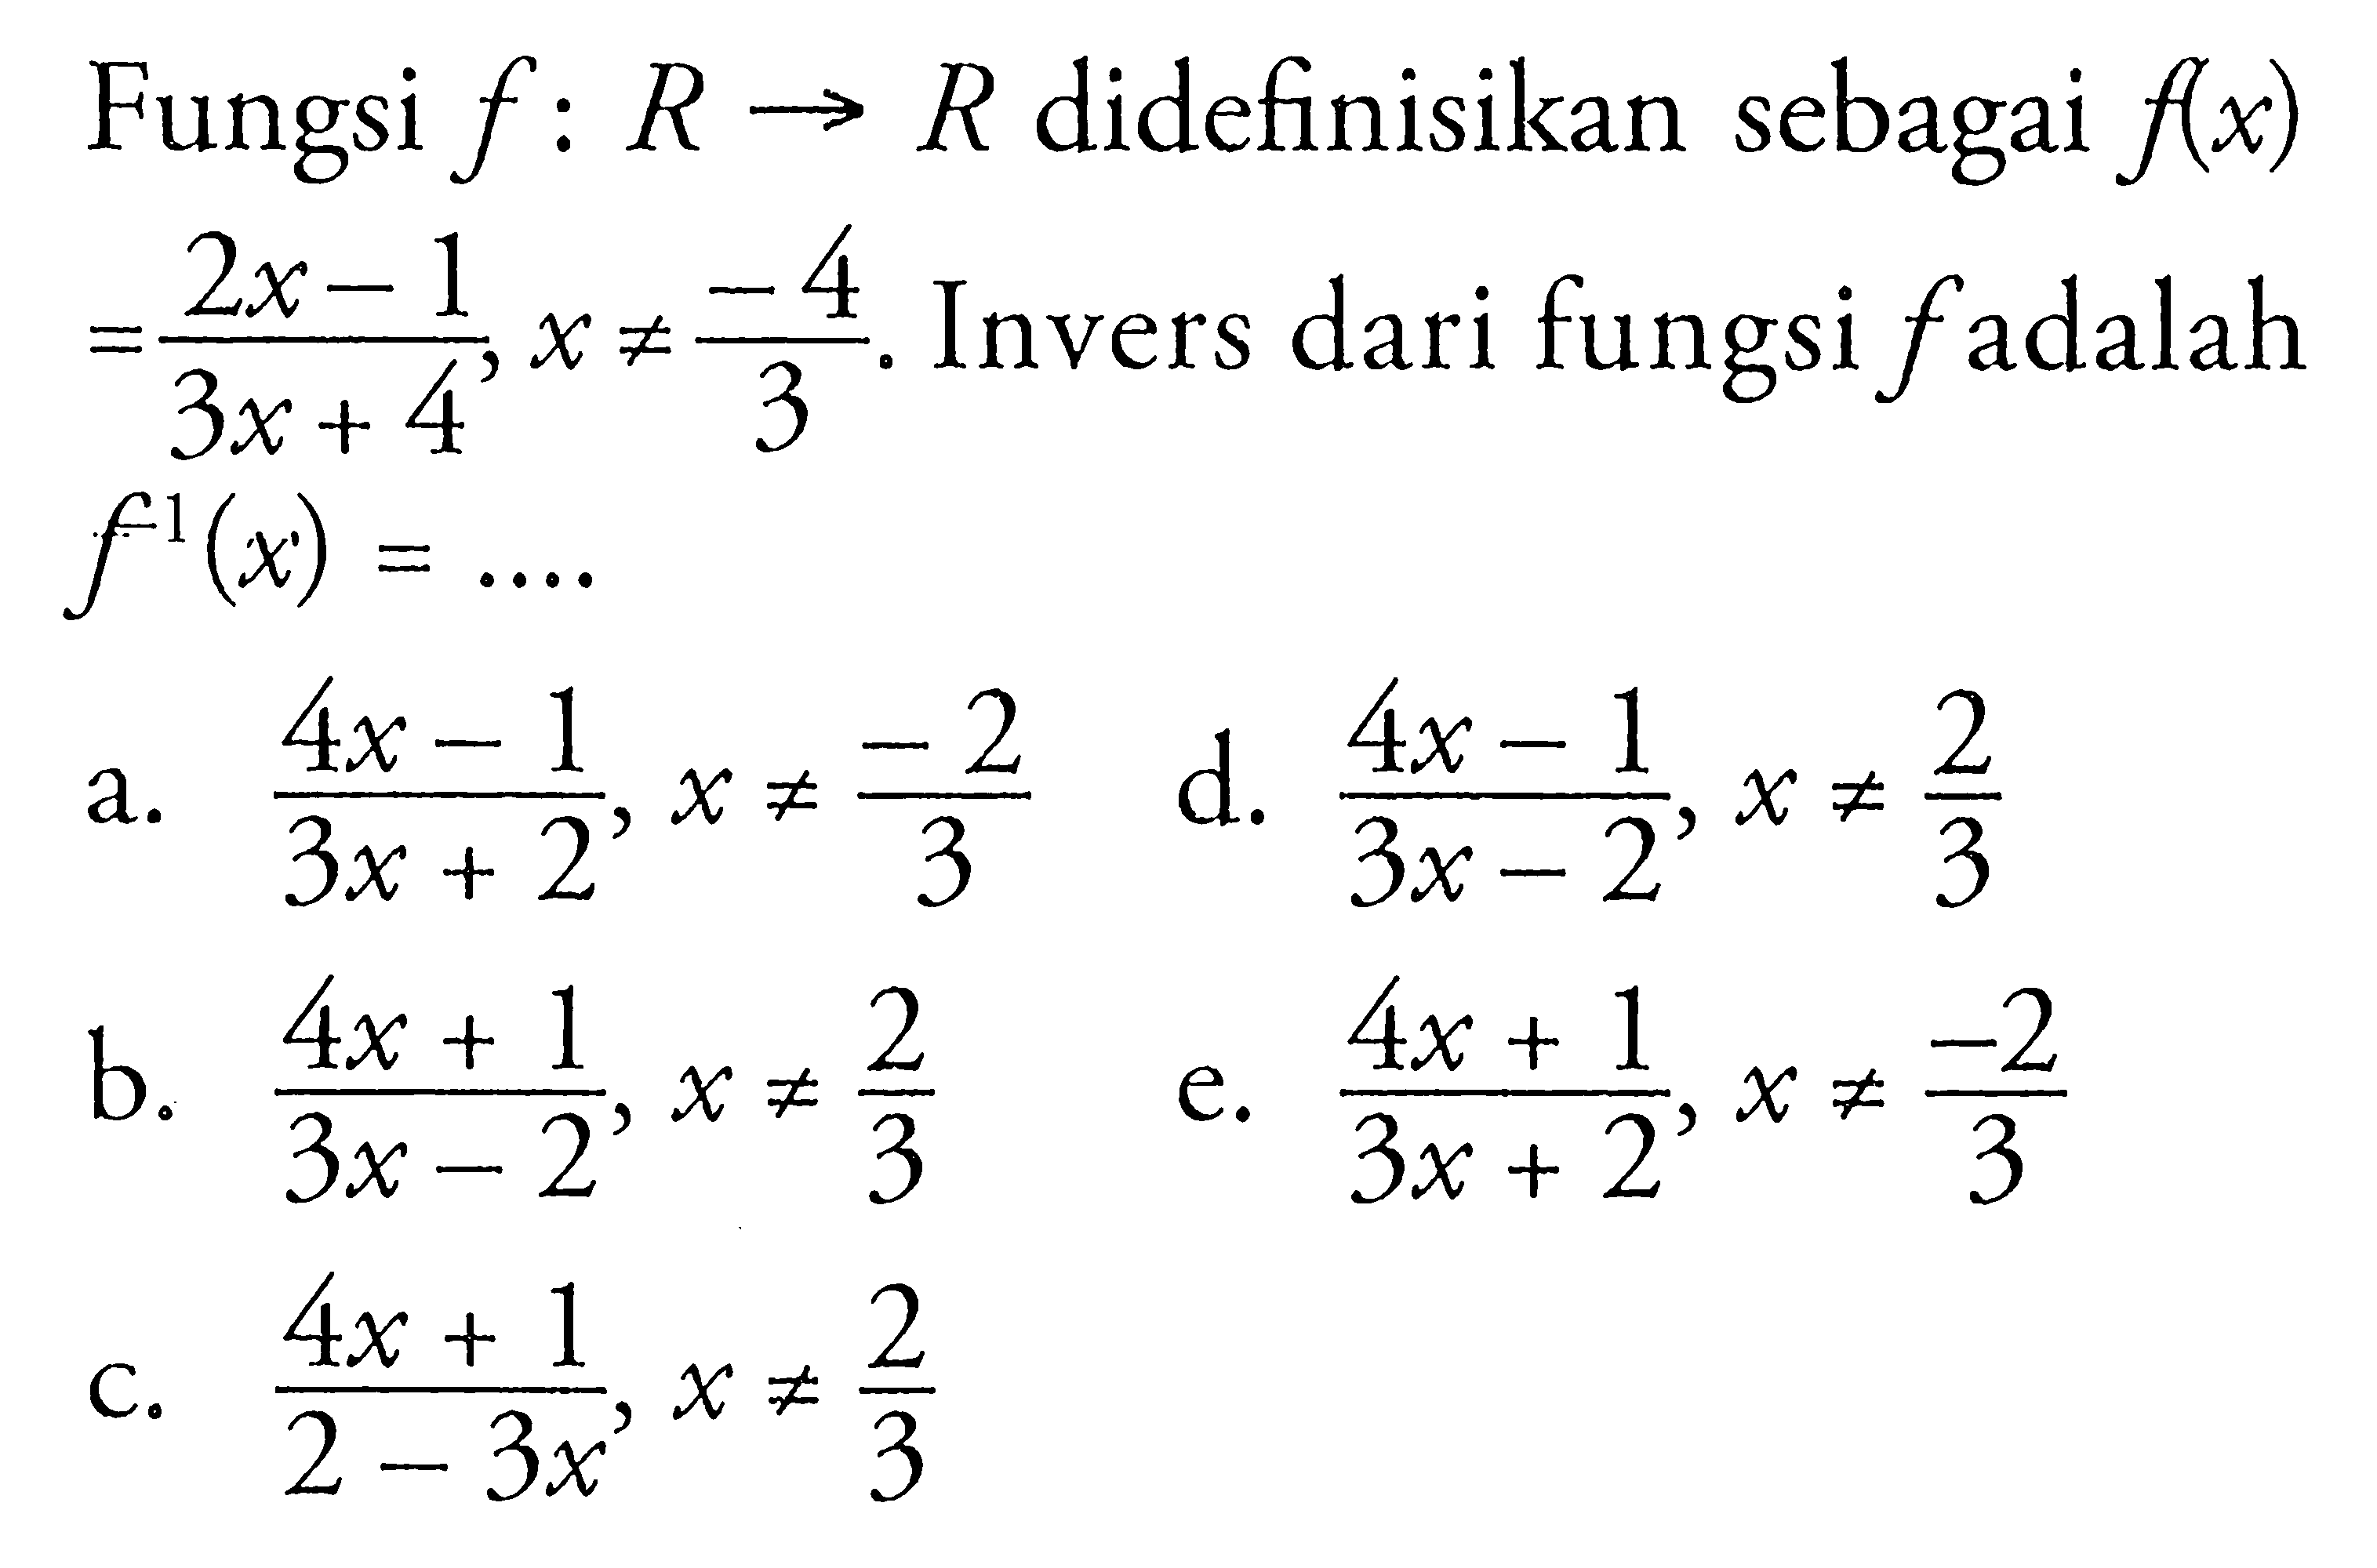 Fungsi  f: R -> R  didefinisikan sebagai  f(x)   =2x-1/3x+4,x =/=  -4/3 . Invers dari fungsi  f  adalah  f^-1(x)=.... 